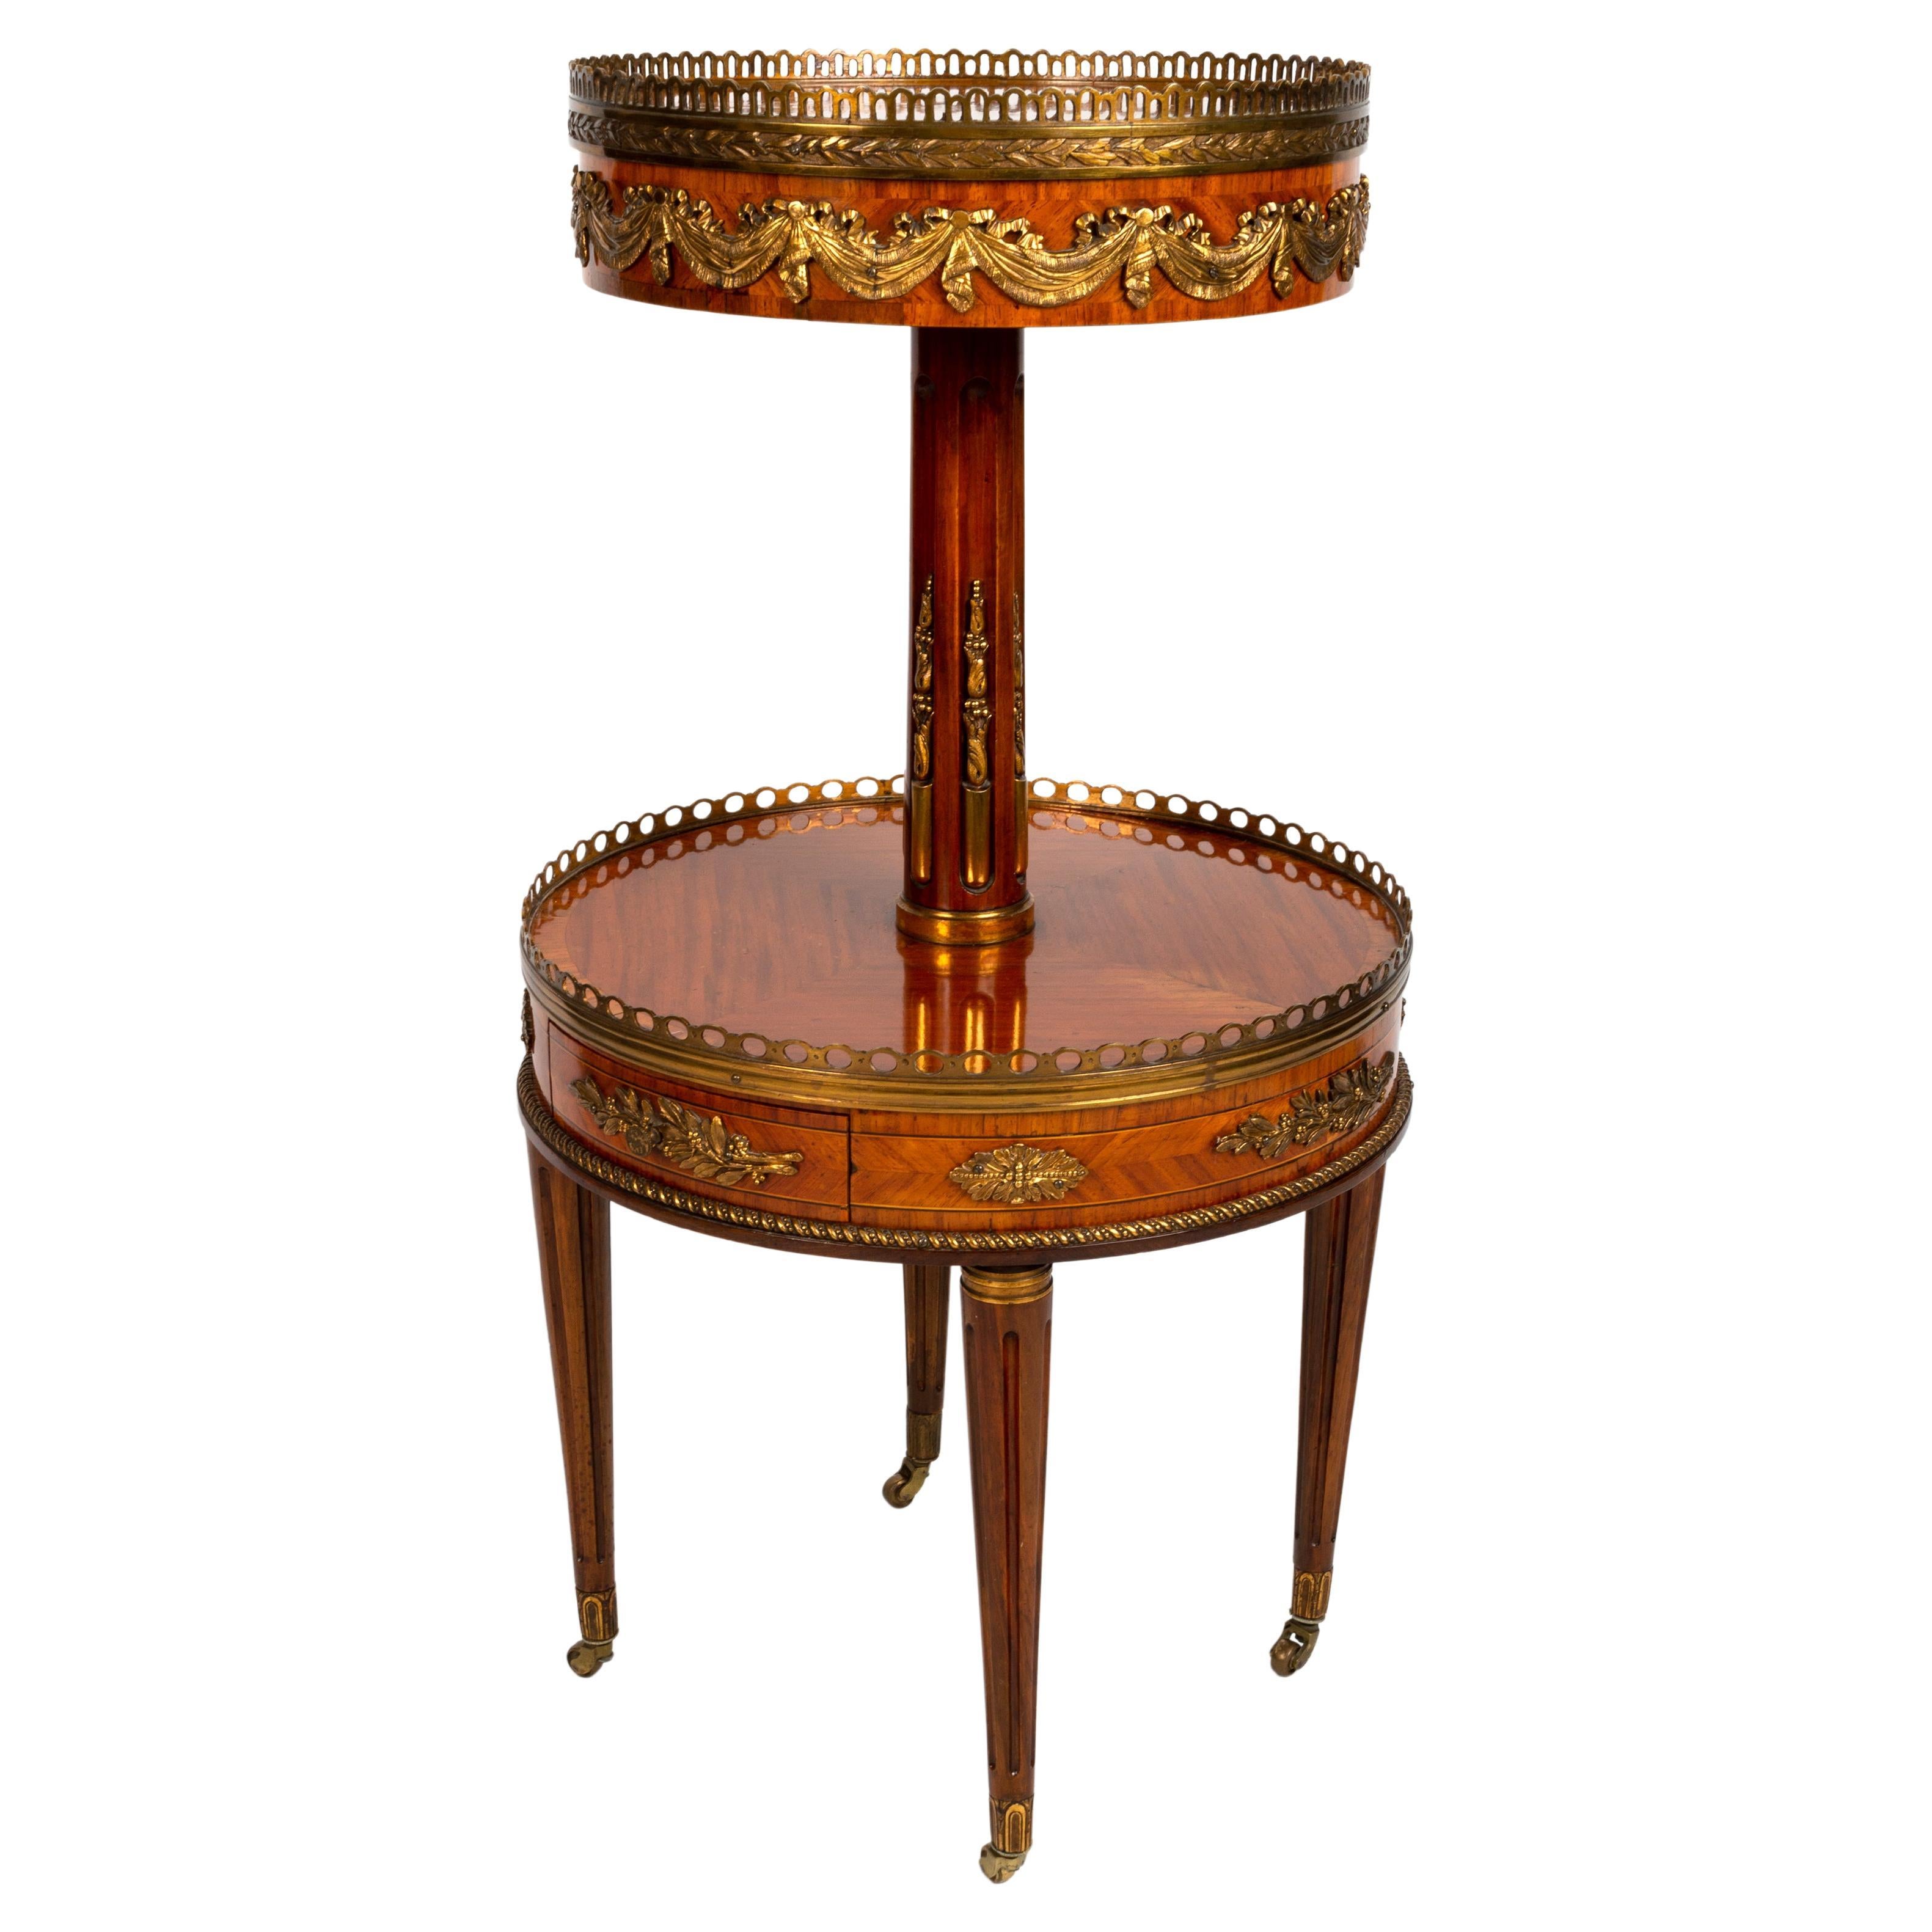 Antique French Louis XV Kingwood Etagere Side Table, Manner of François Linke